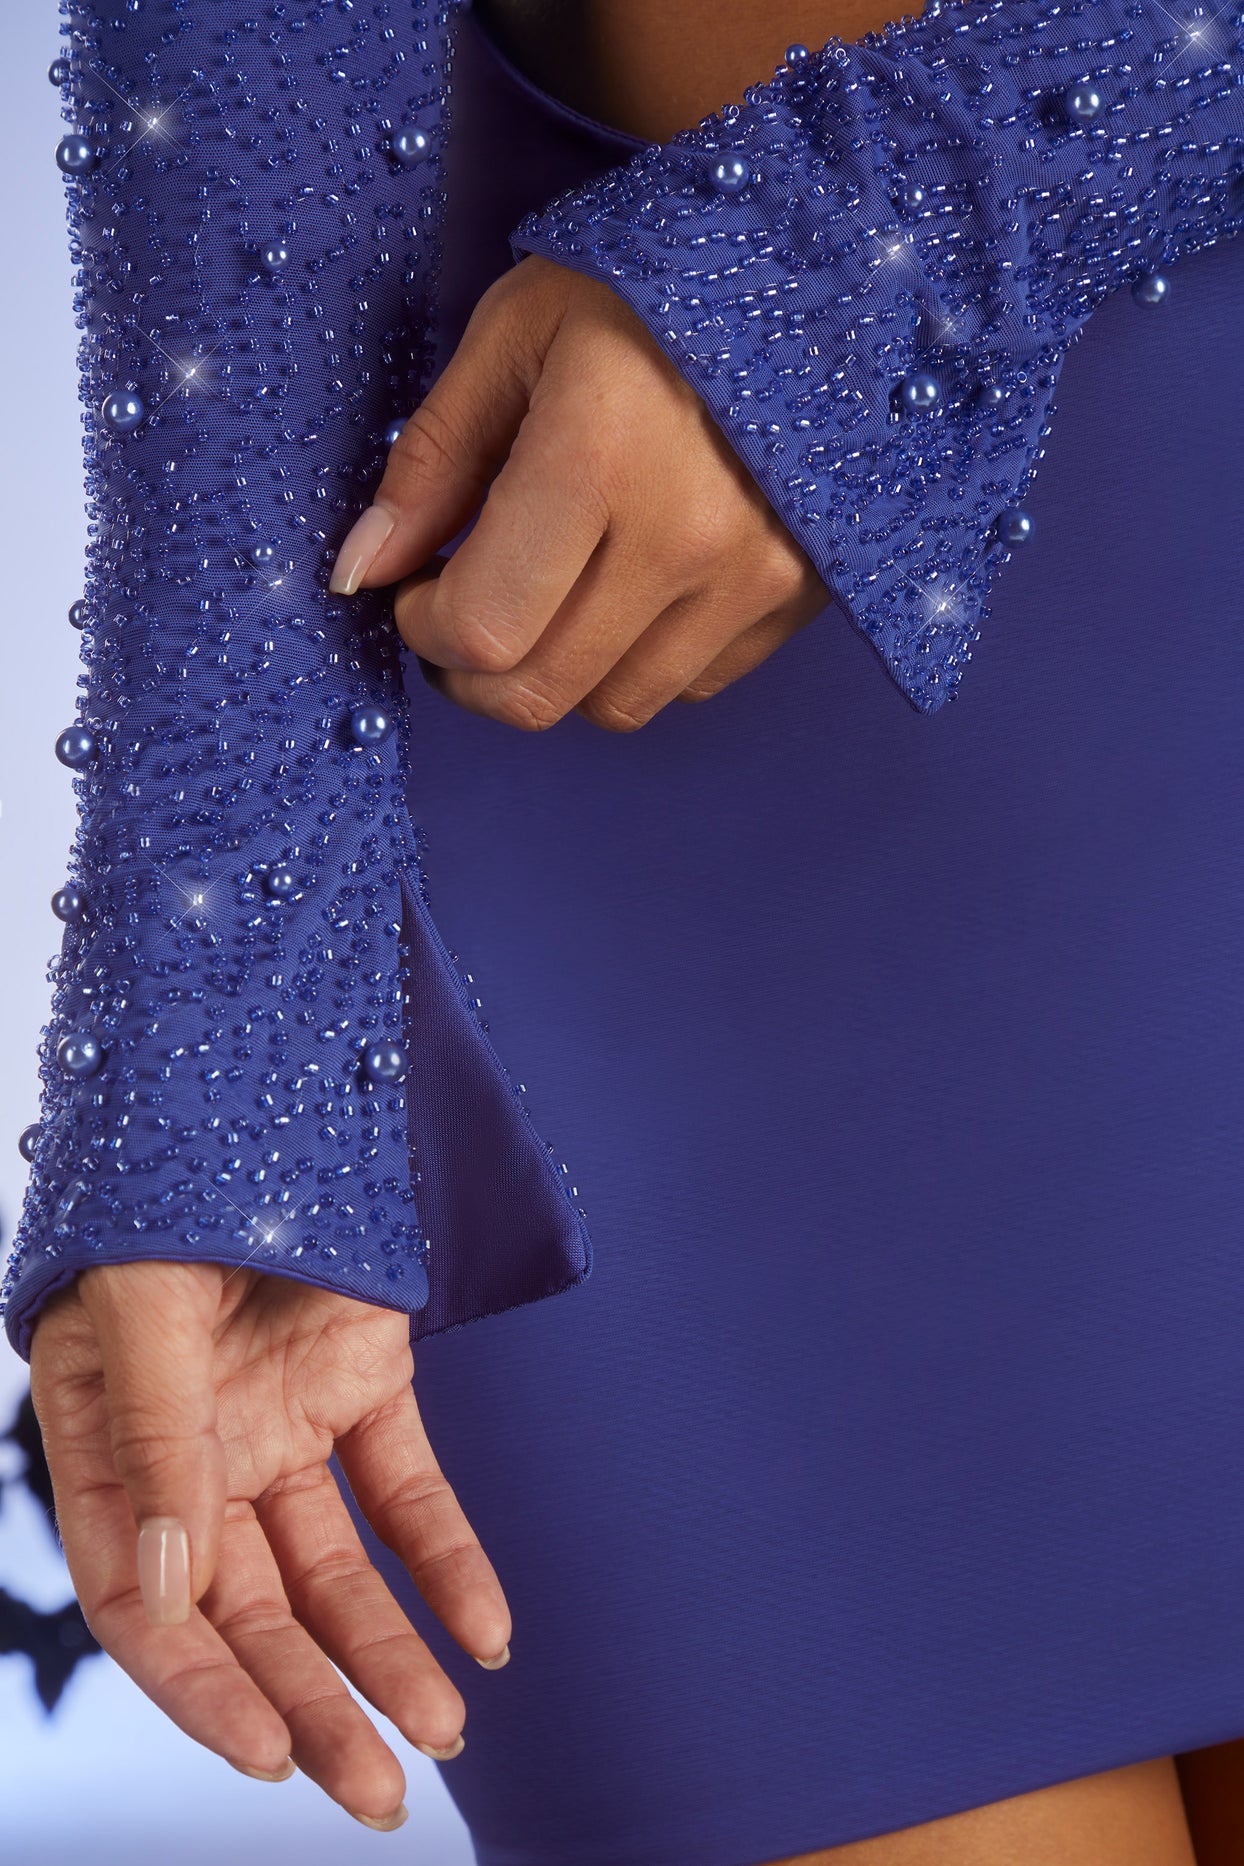 Embellished Long Sleeve Cut Out Mini Dress in Dark Blue